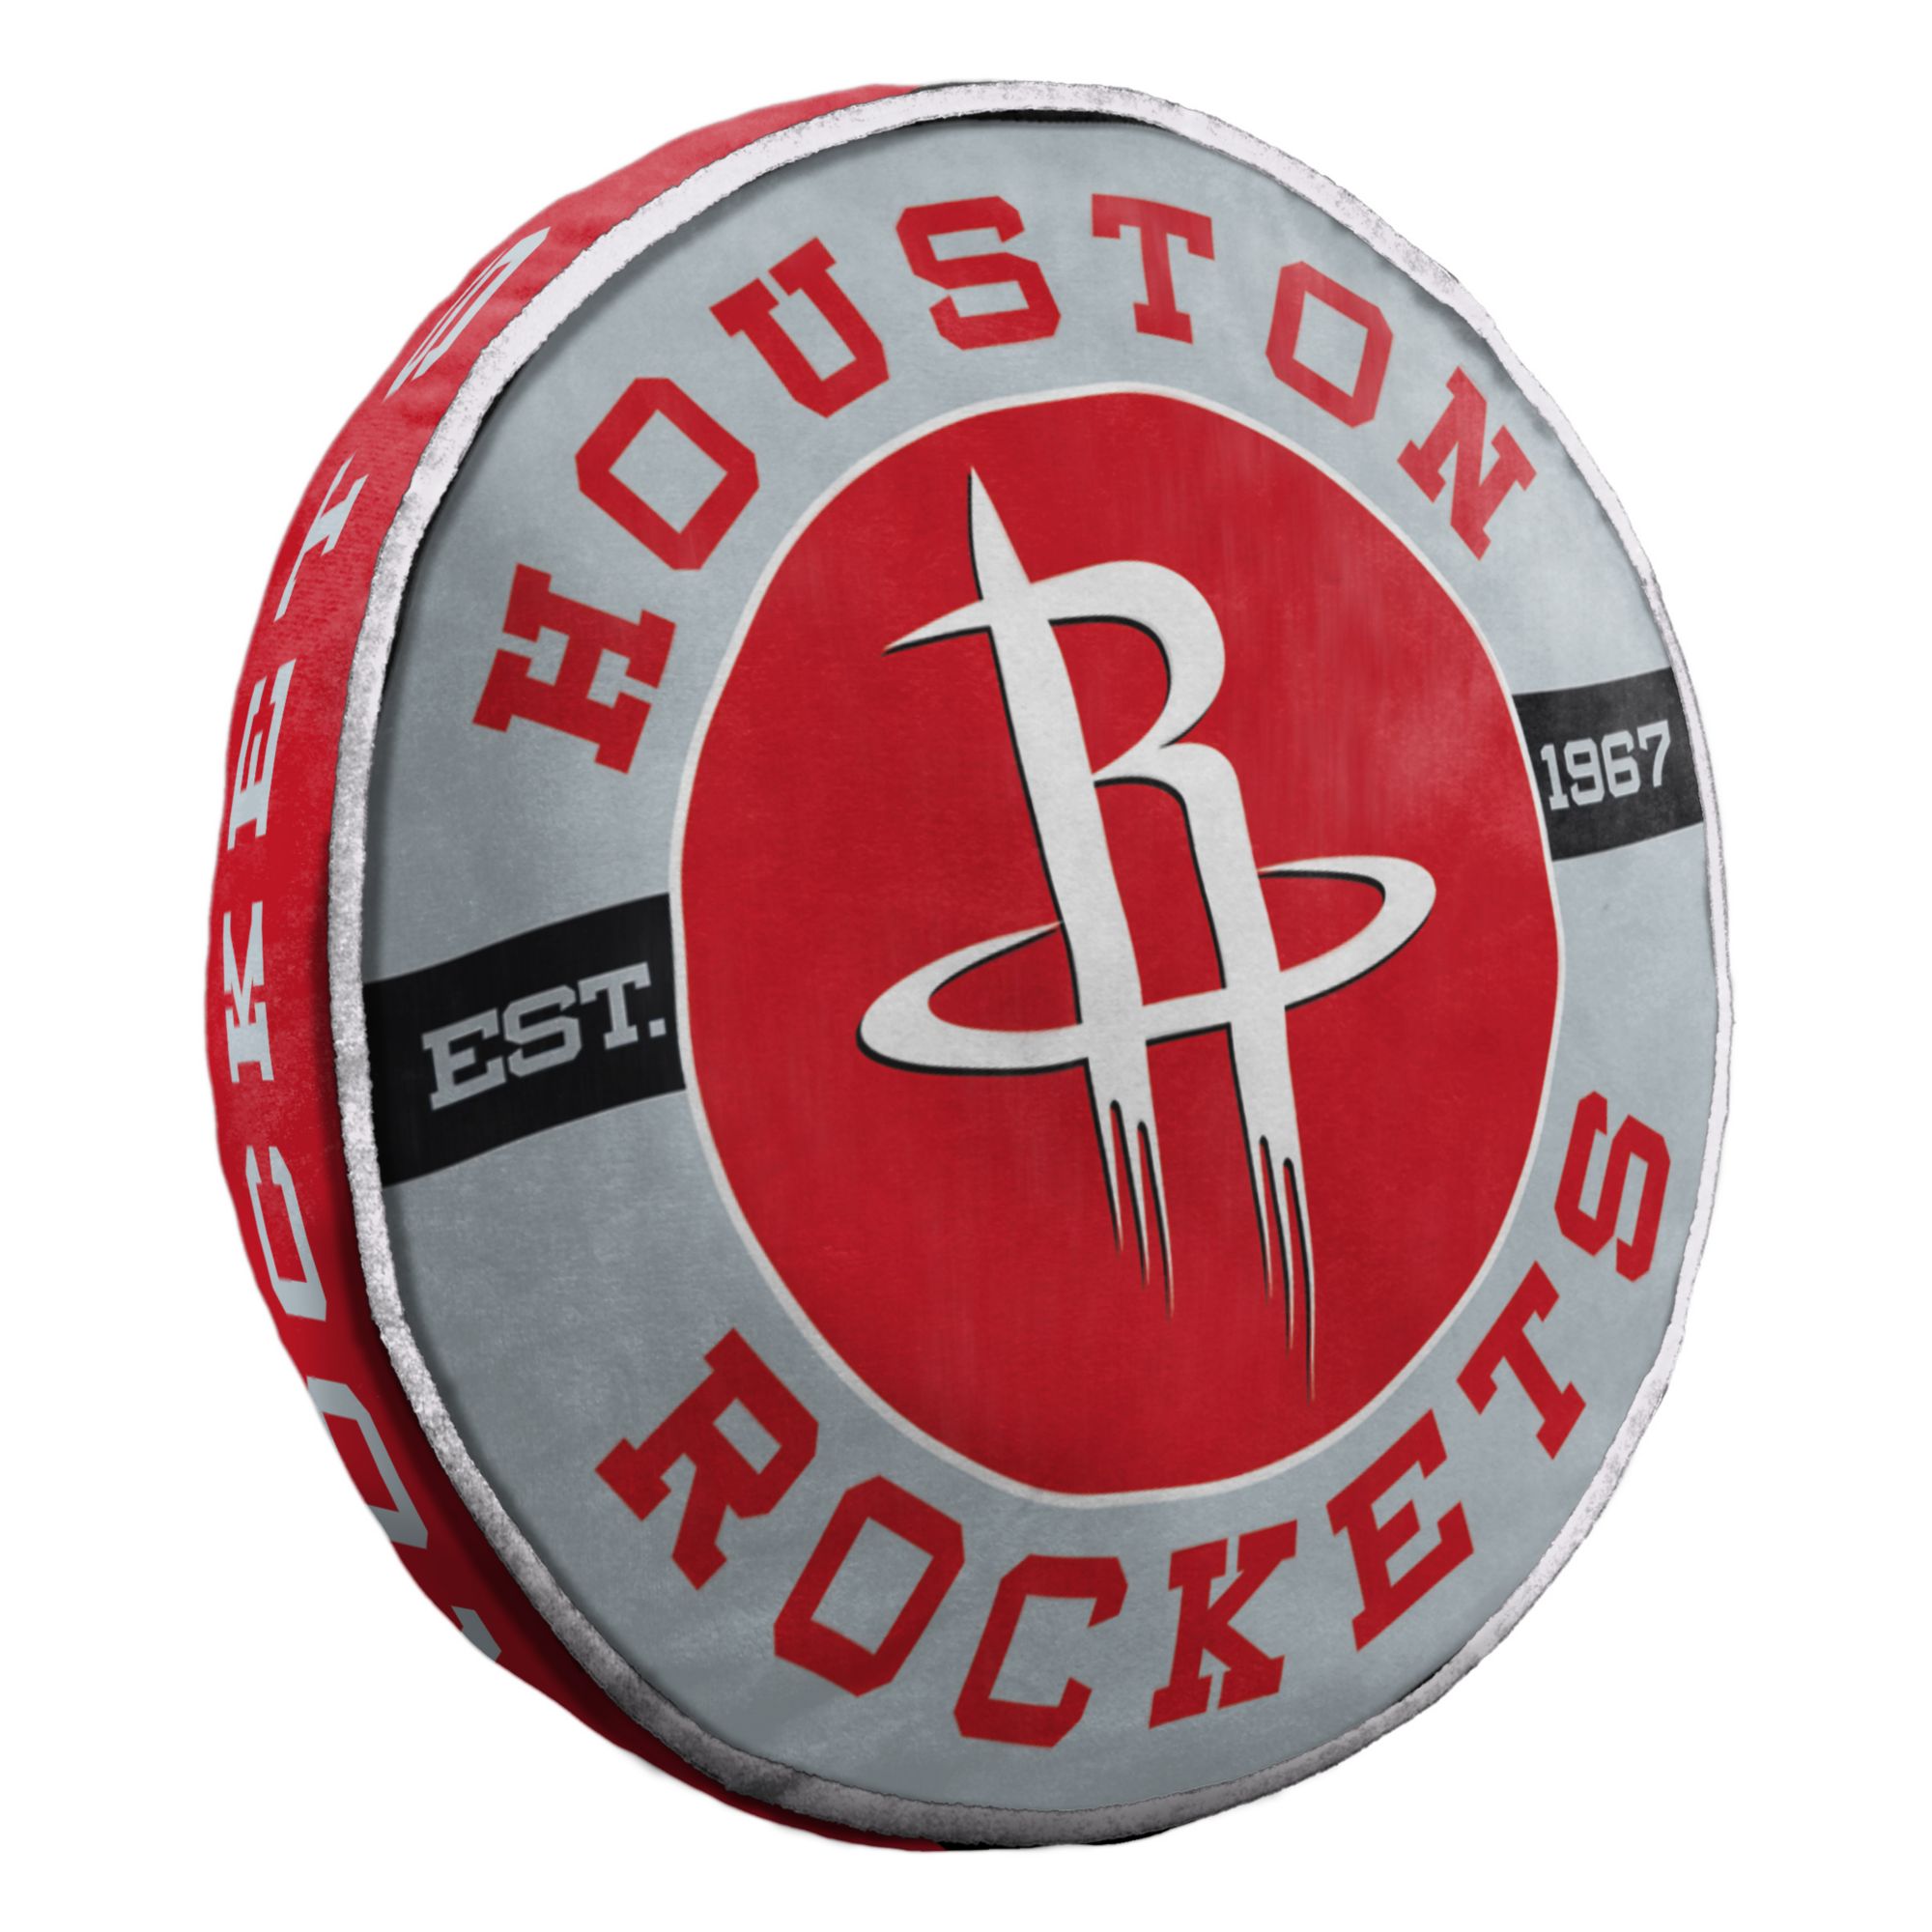 TheNorthwest Houston Rockets Cloud Pillow